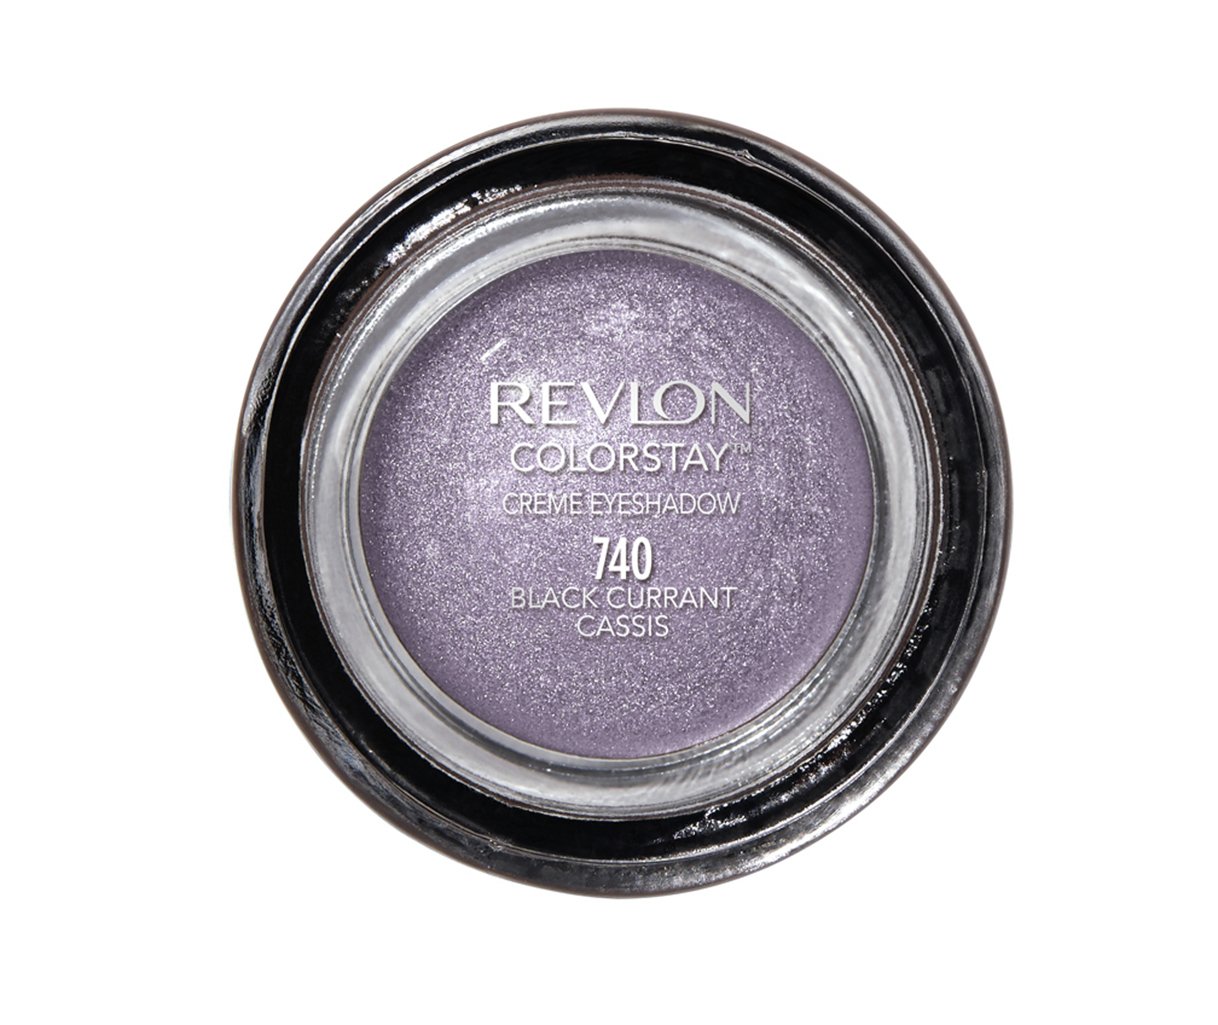 Revlon ColorStay Creme Eye Shadow - Blackcurrant 740